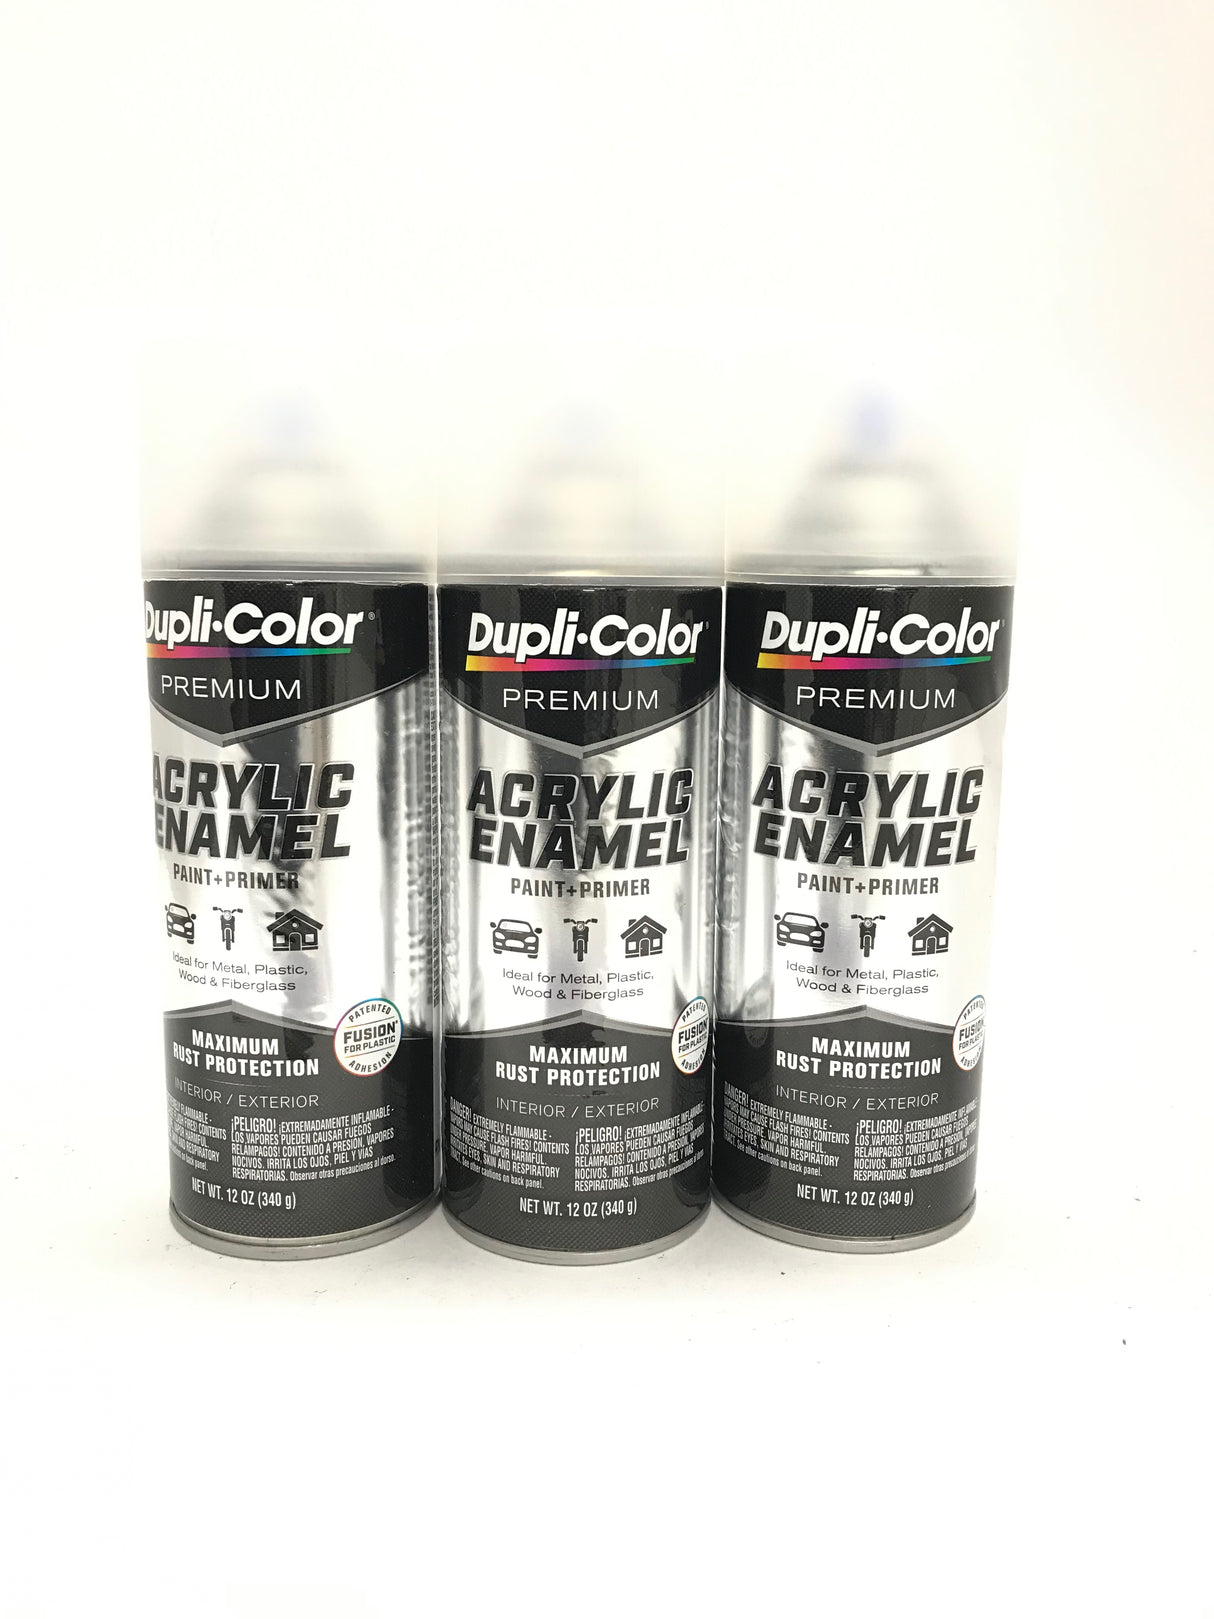 Duplicolor PAE115-3 PACK MATTE CLEAR Premium Acrylic Enamel -Max Rust Protection - 12 OZ